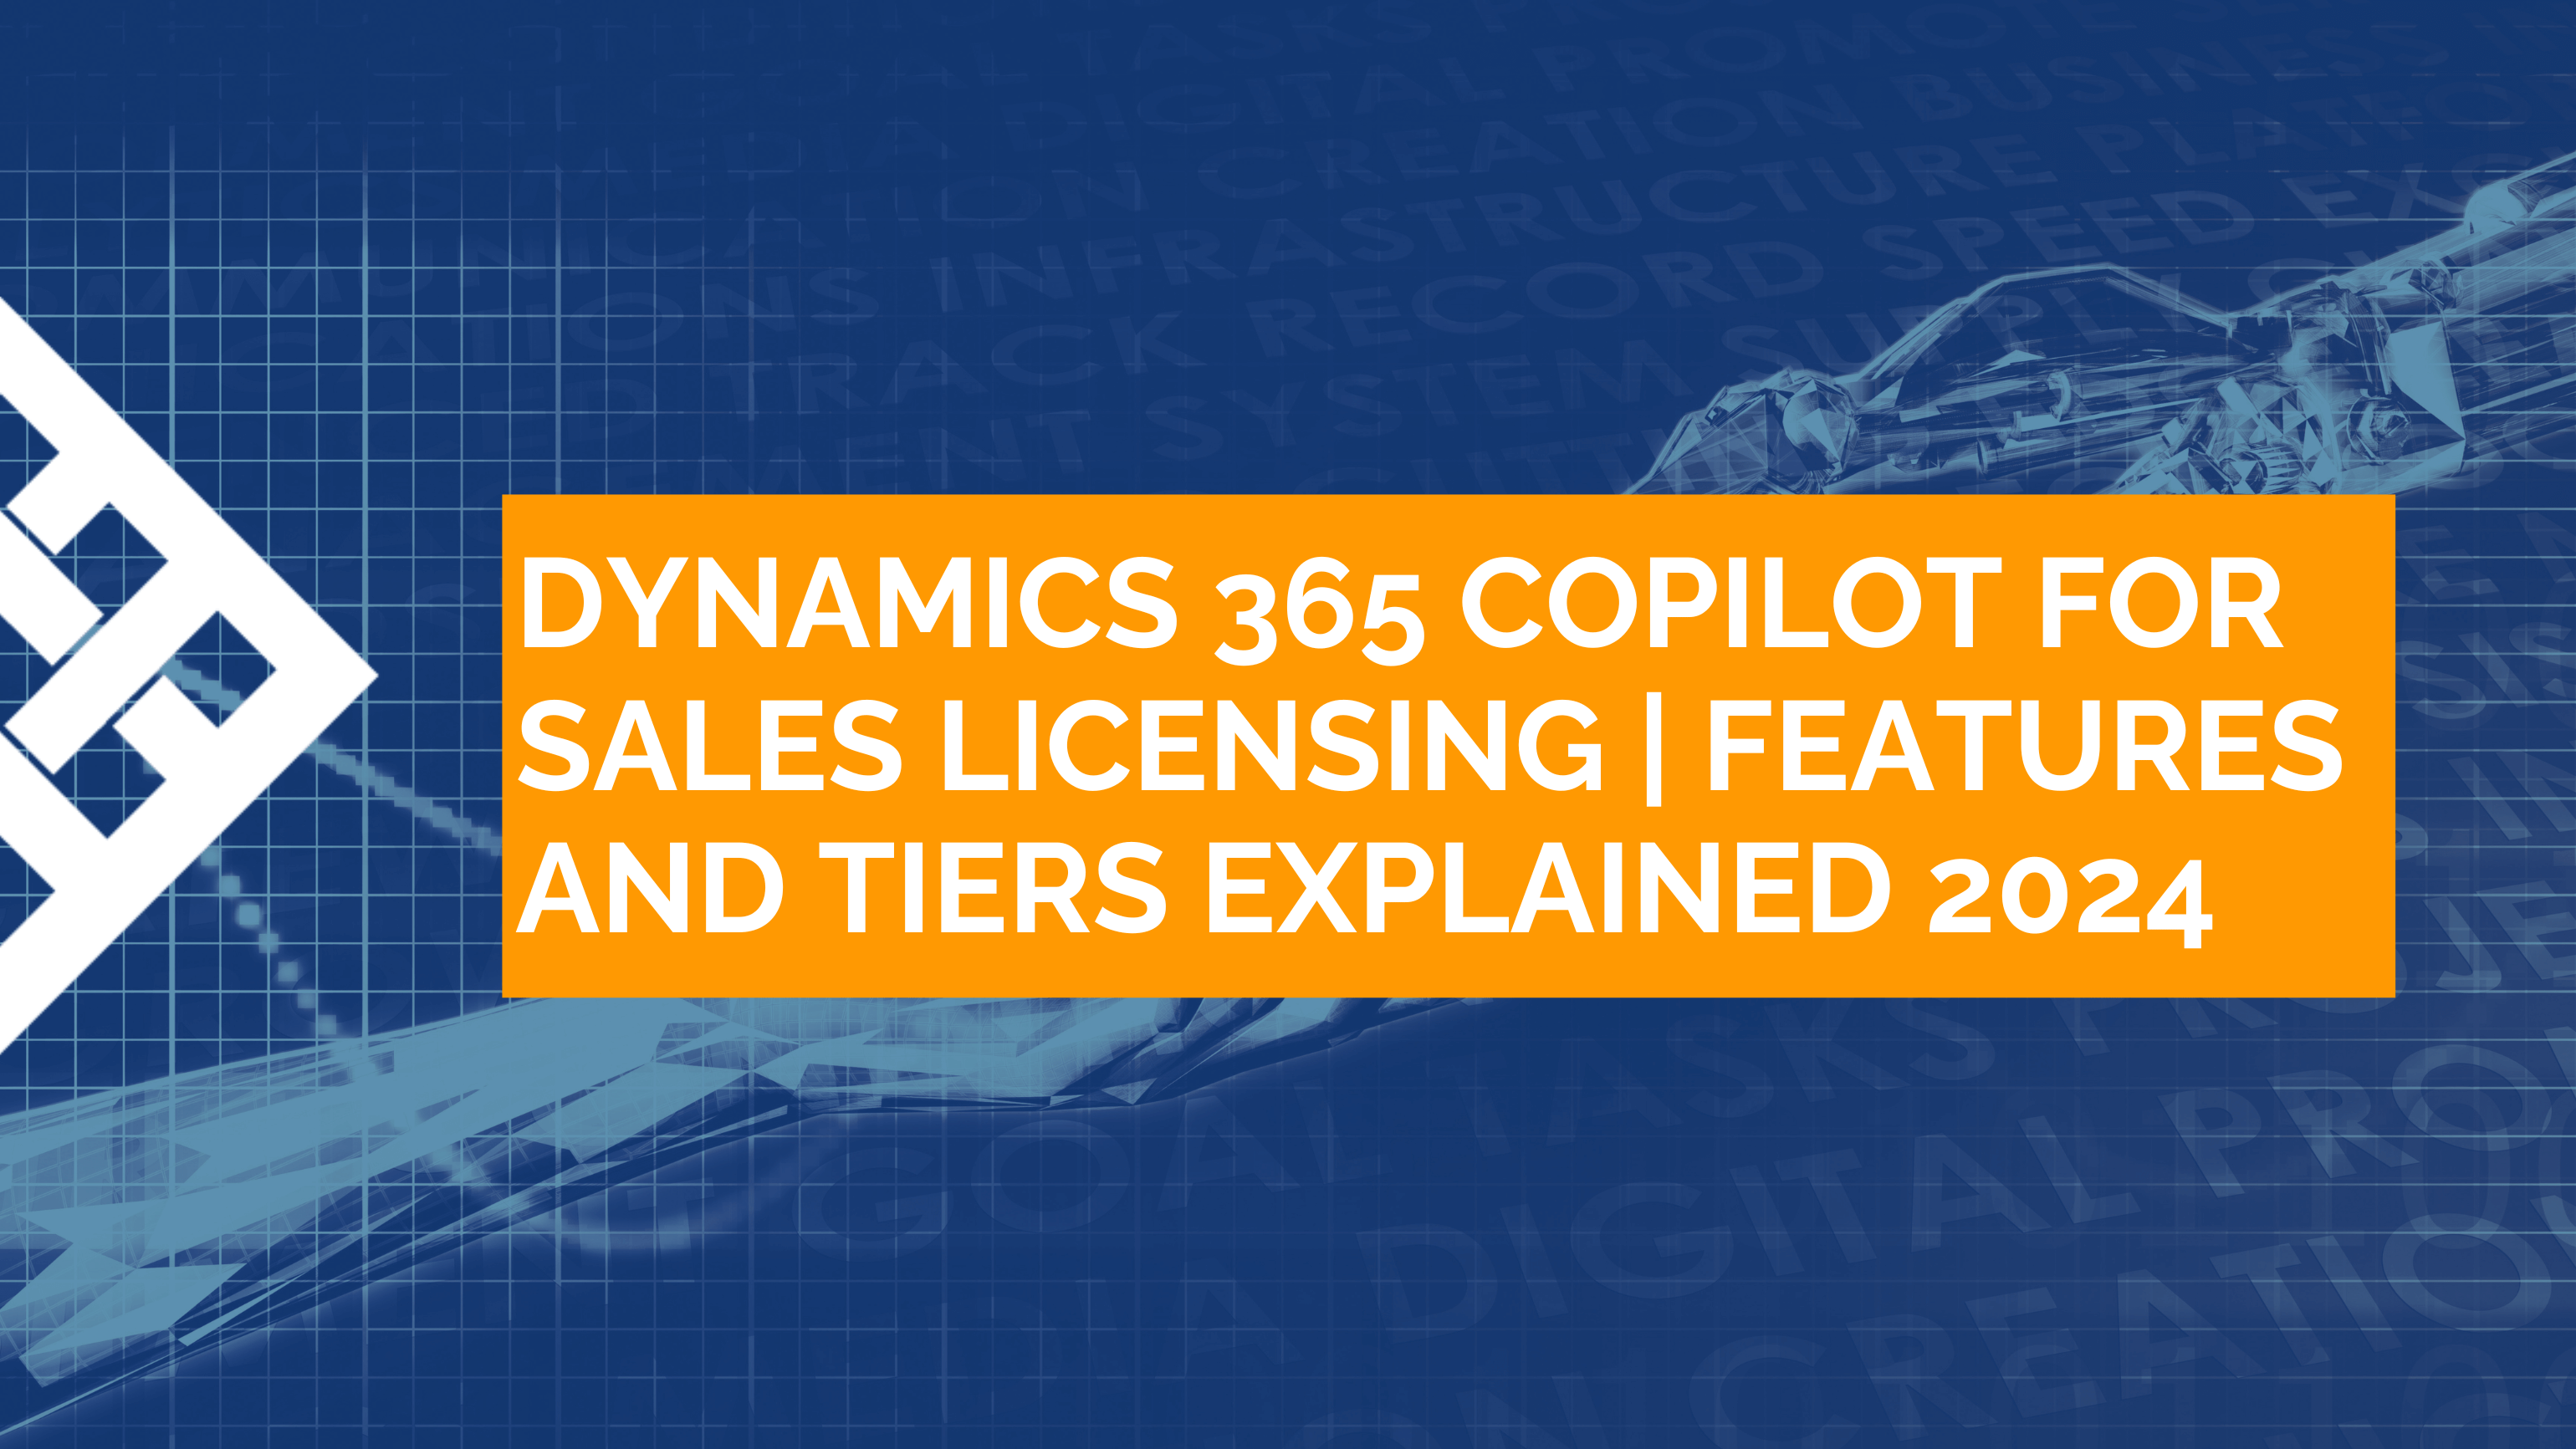 Dynamics 365 Copilot for Sales Licensing Explained 2024